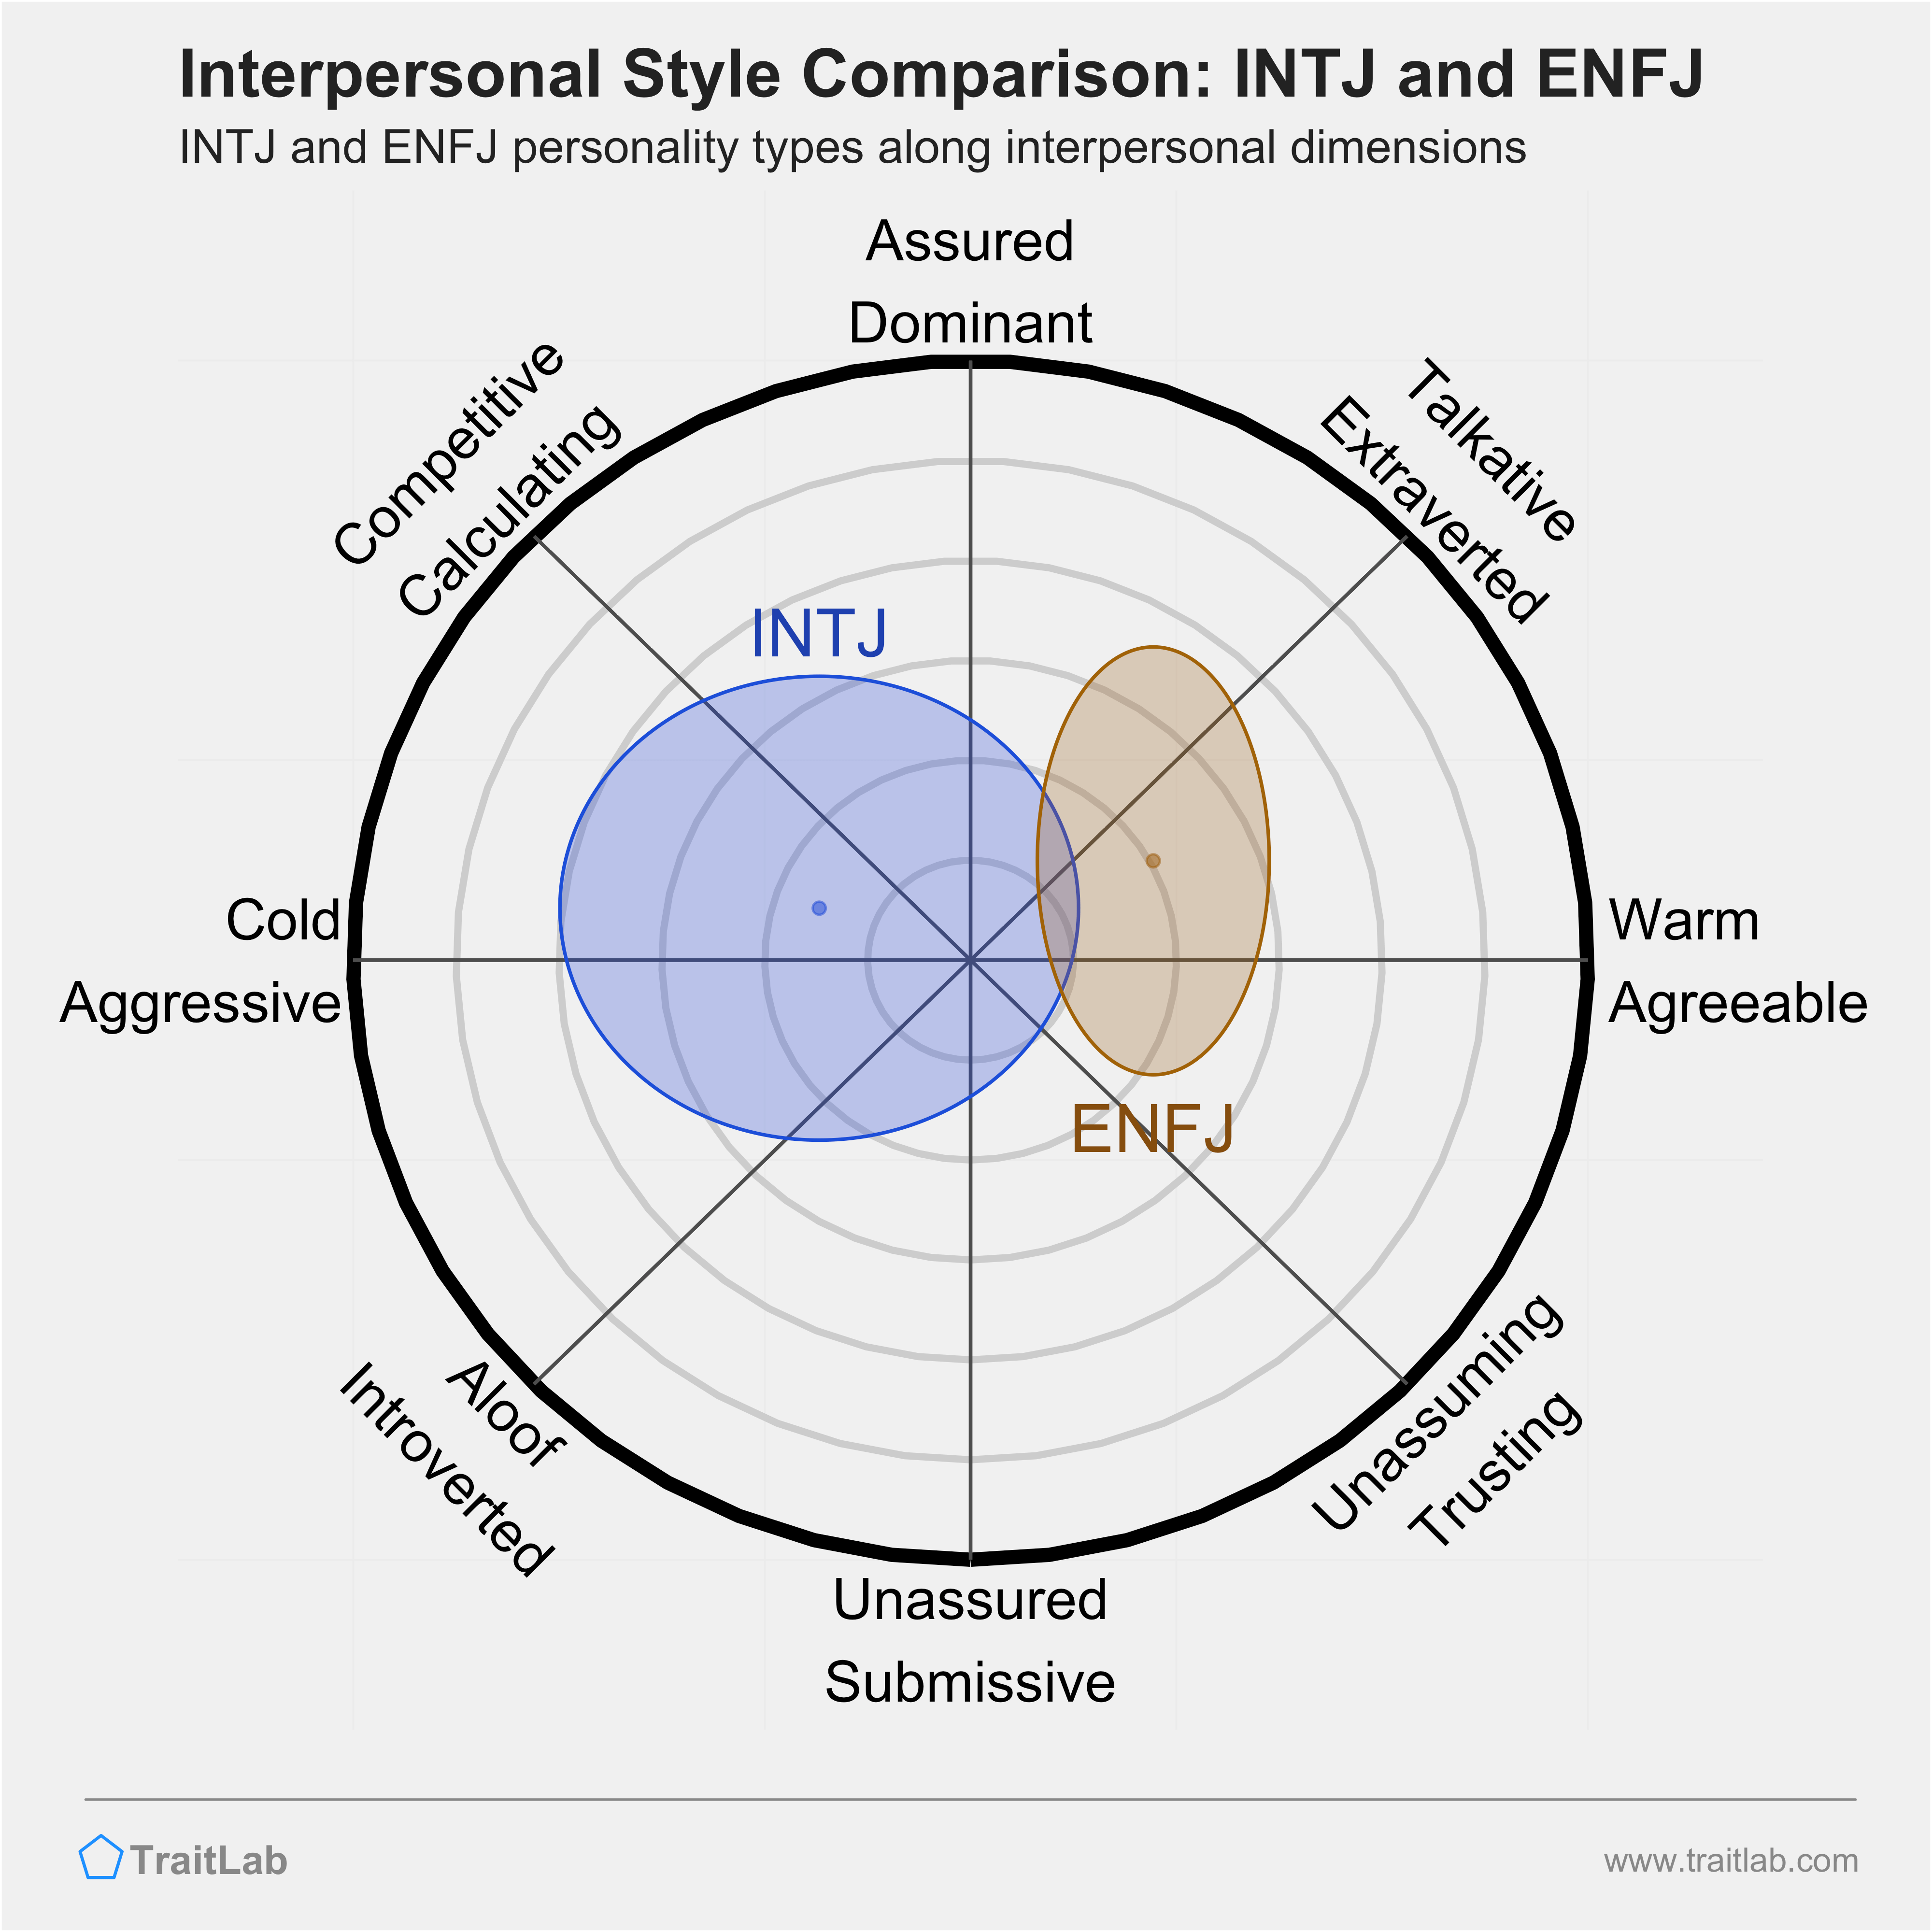 INTJ and ENFJ comparison across interpersonal dimensions